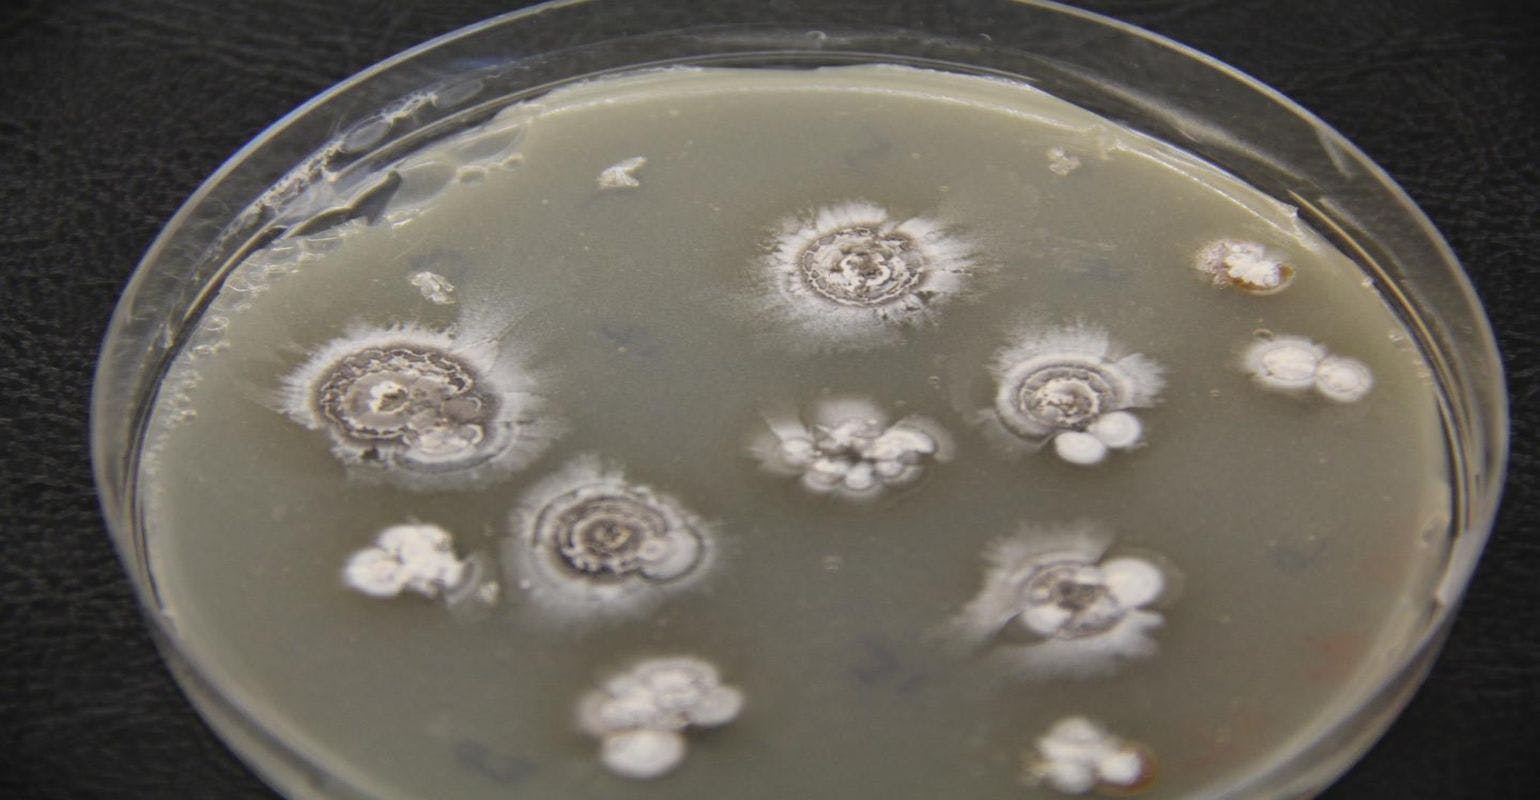 Scientists Find Potential Disease-Fighting 'Warheads' Hidden in Bacteria